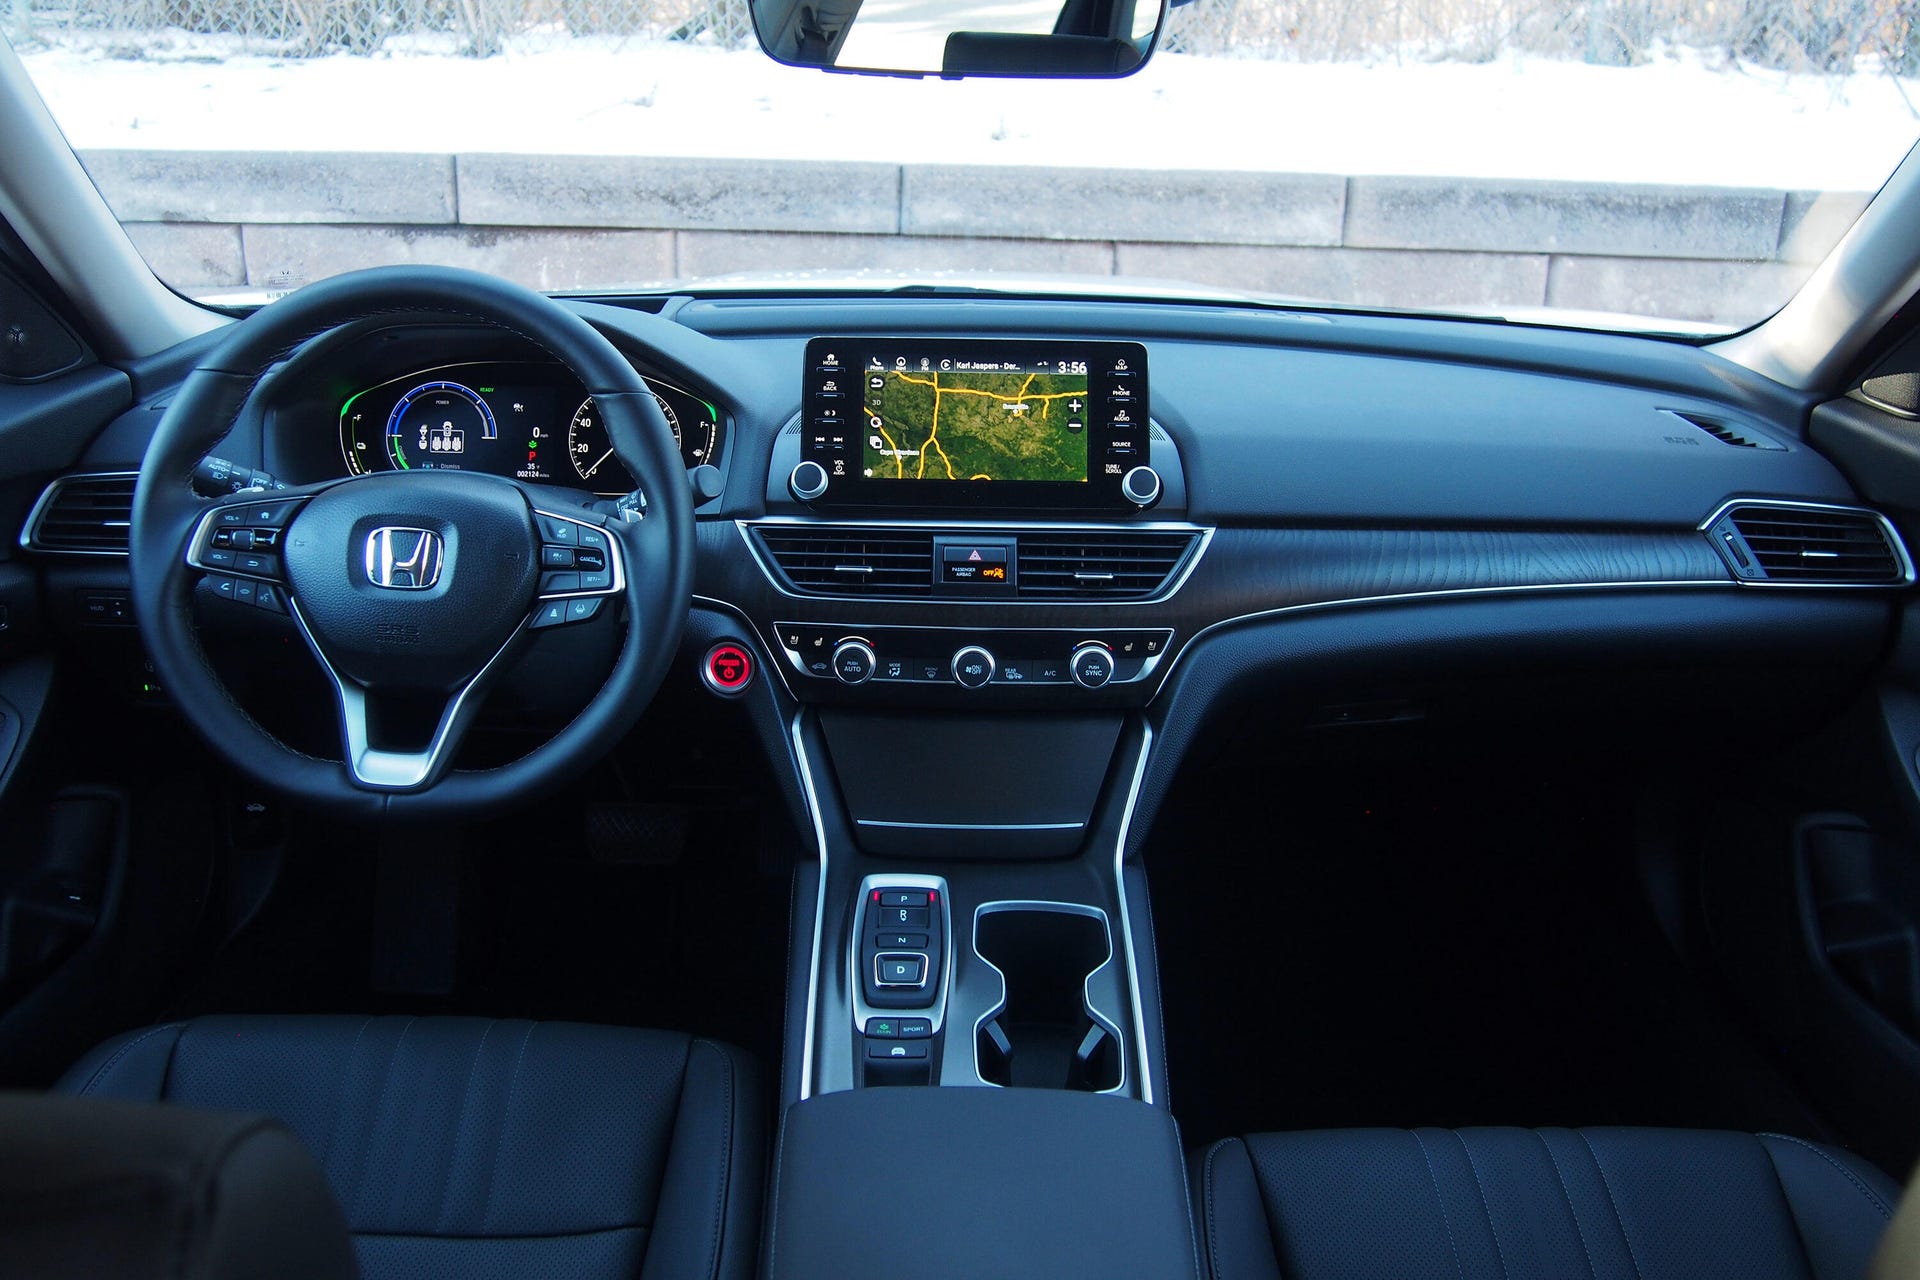 2021 Honda Accord Hybrid review: Enhanced efficiency, no compromises - CNET